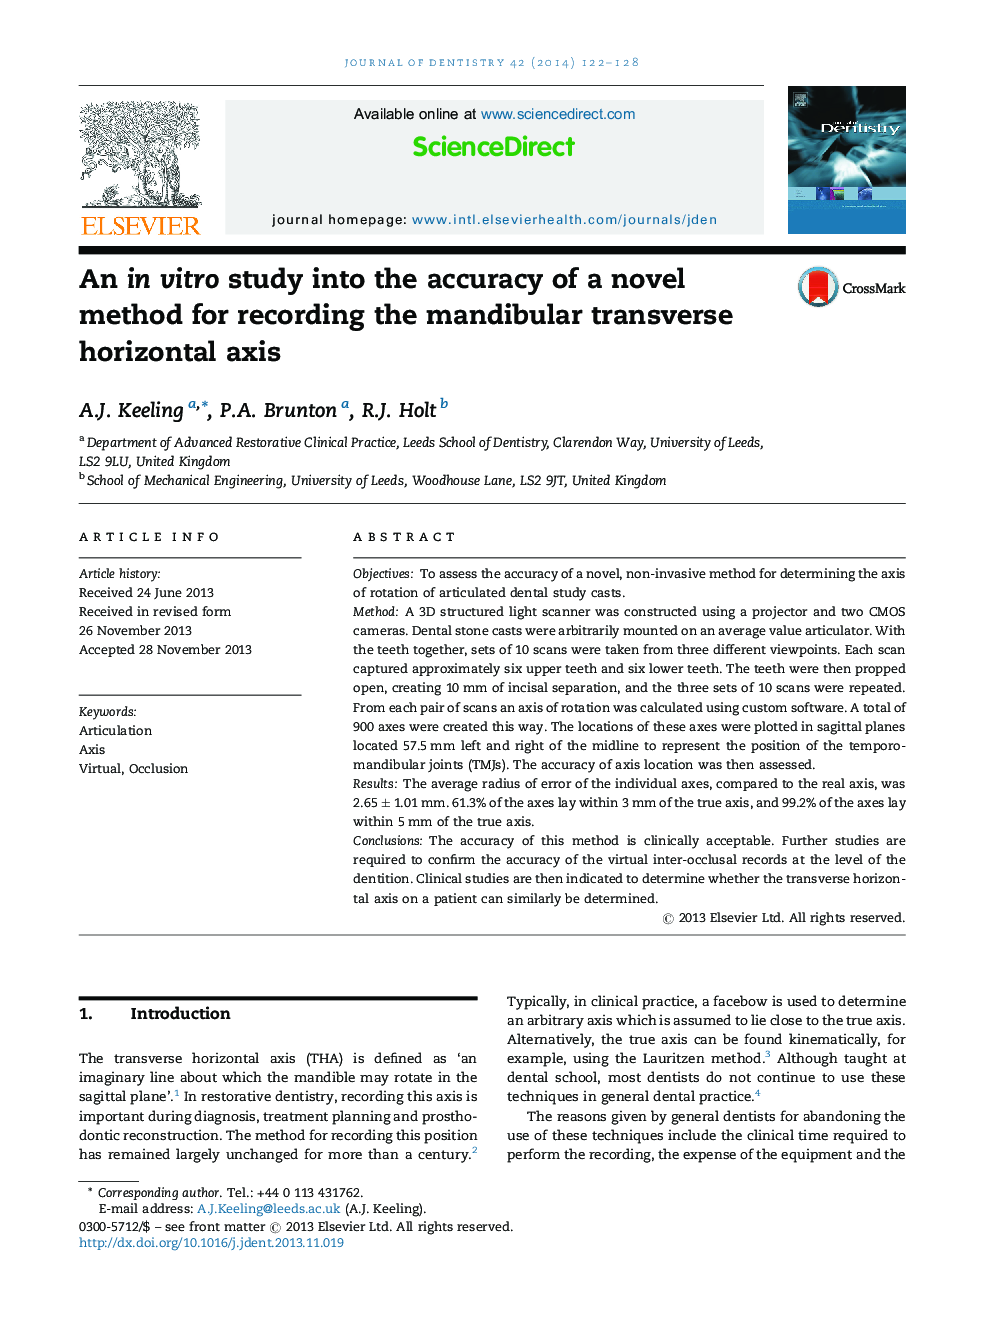 An in vitro study into the accuracy of a novel method for recording the mandibular transverse horizontal axis